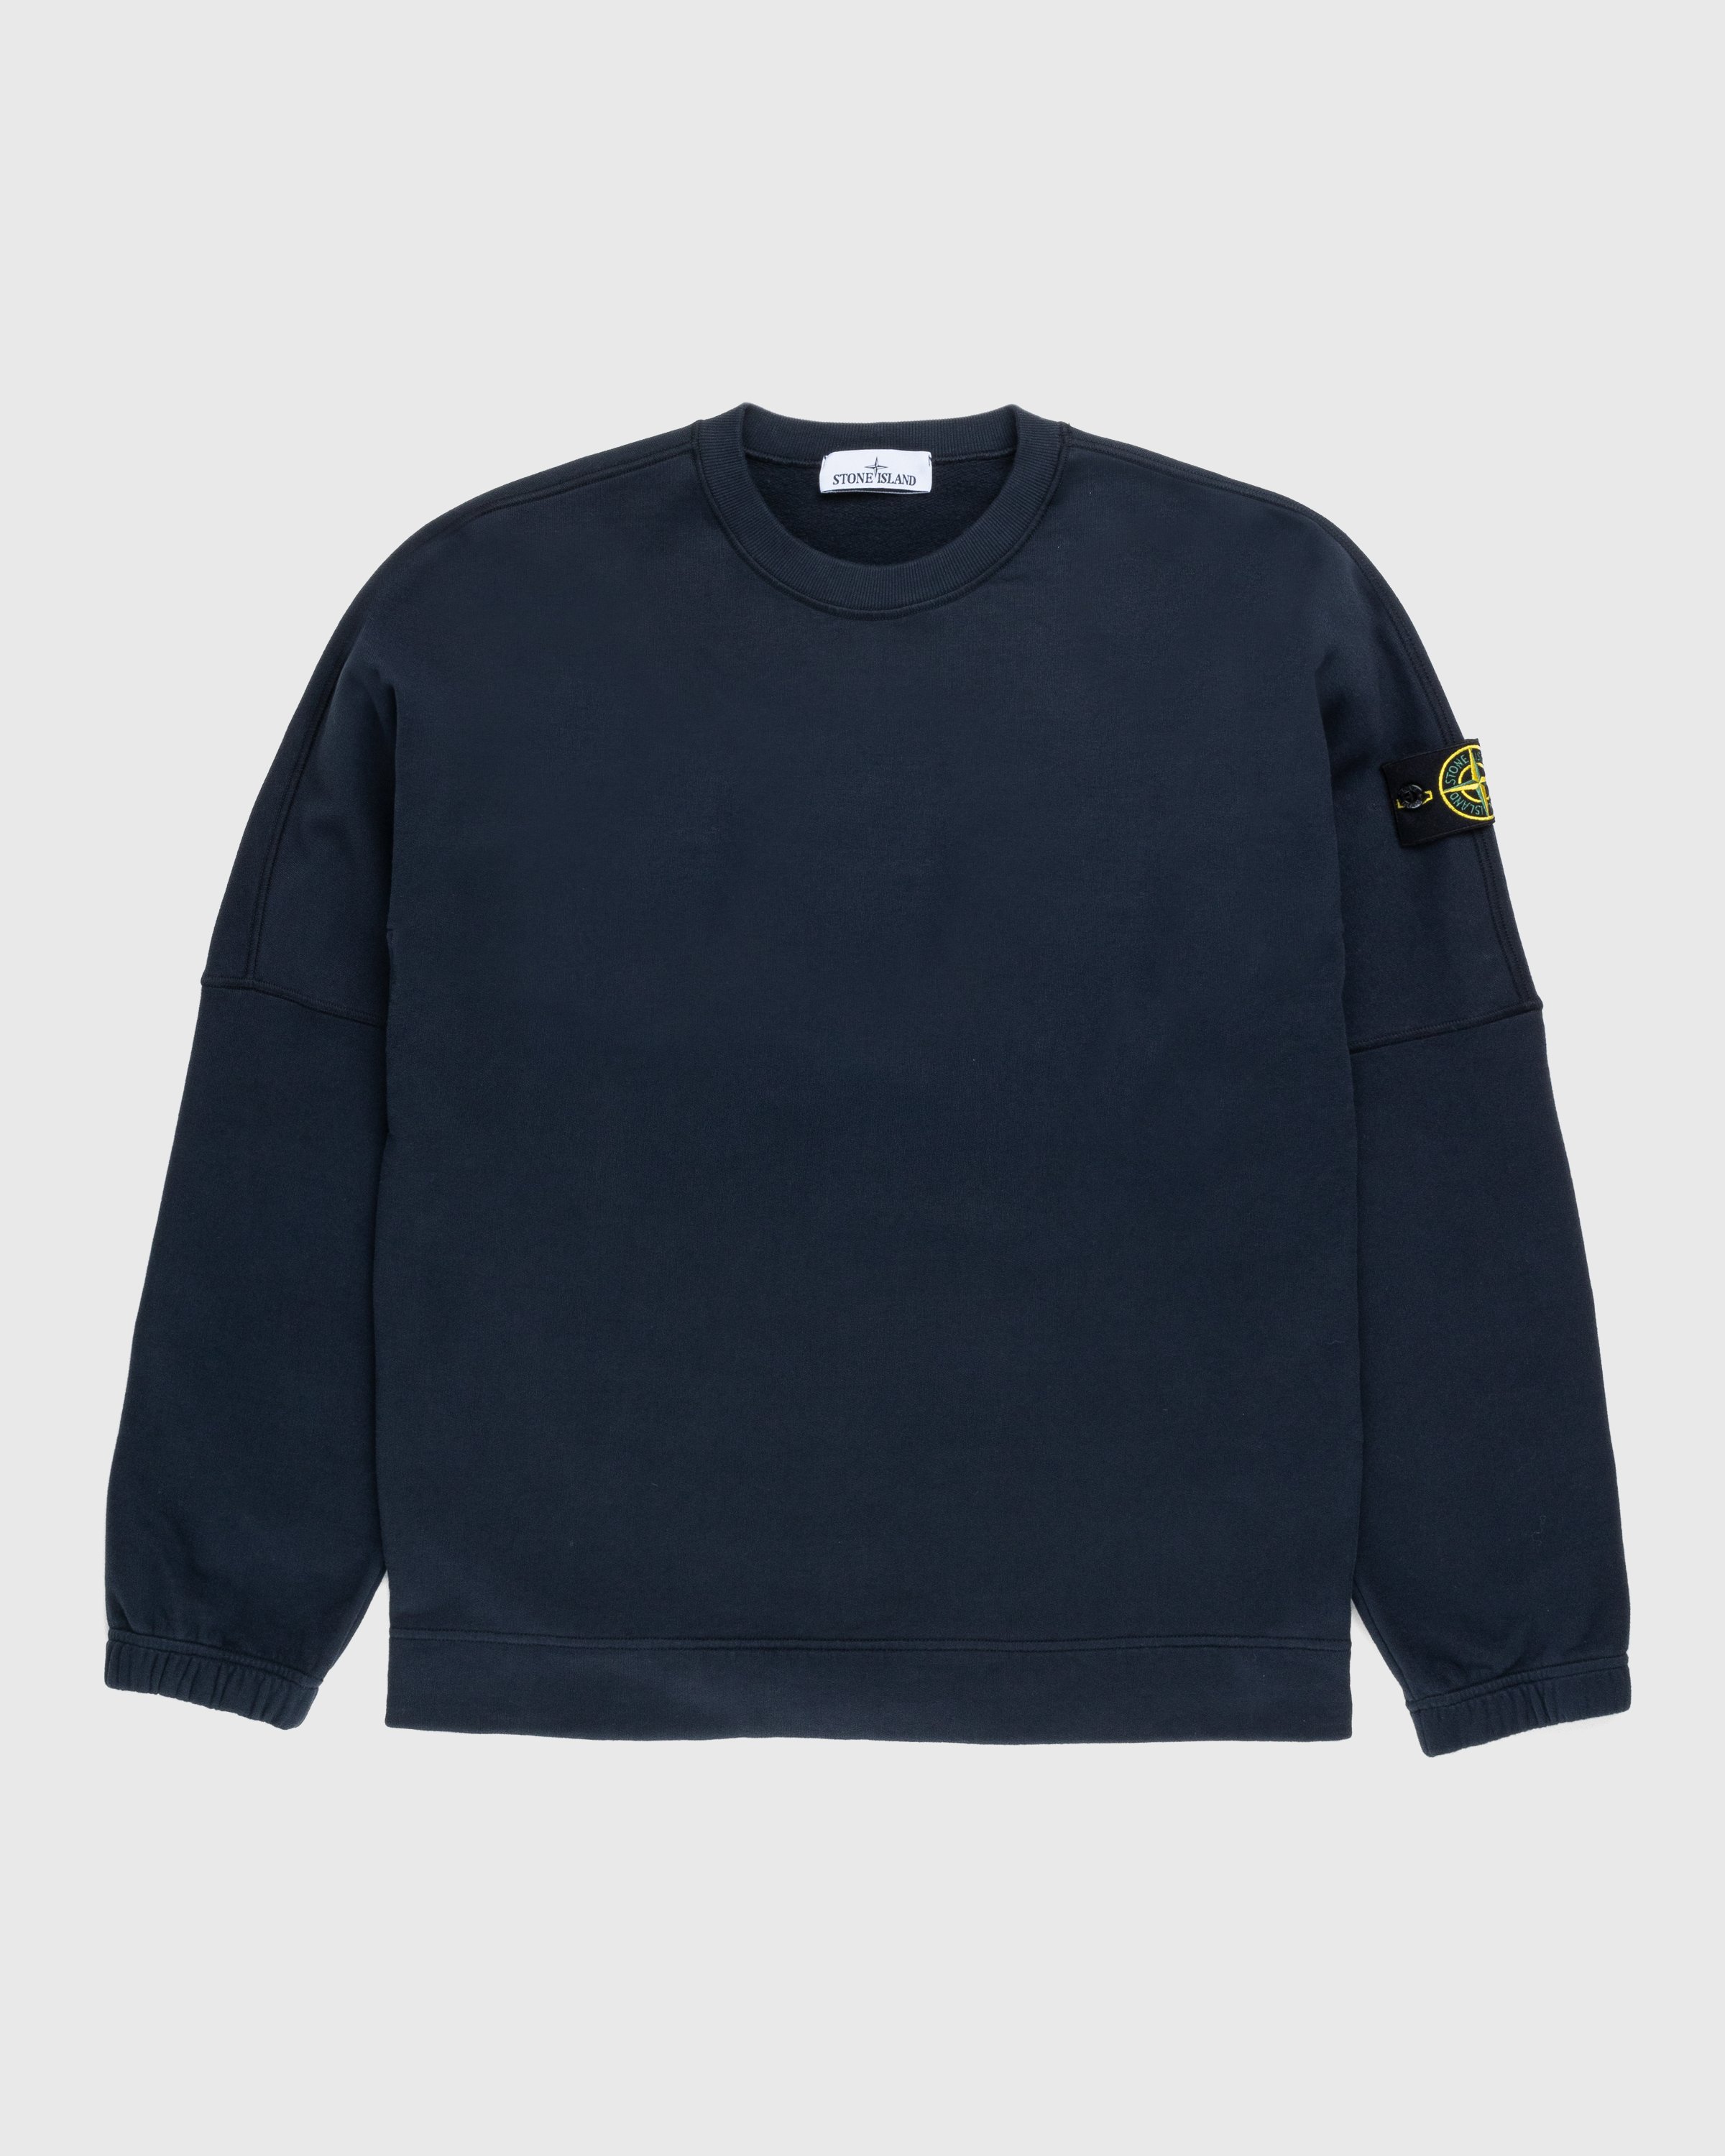 Stone Island - Garment-Dyed Fleece Crewneck Sweatshirt Navy Blue - Clothing - Blue - Image 1